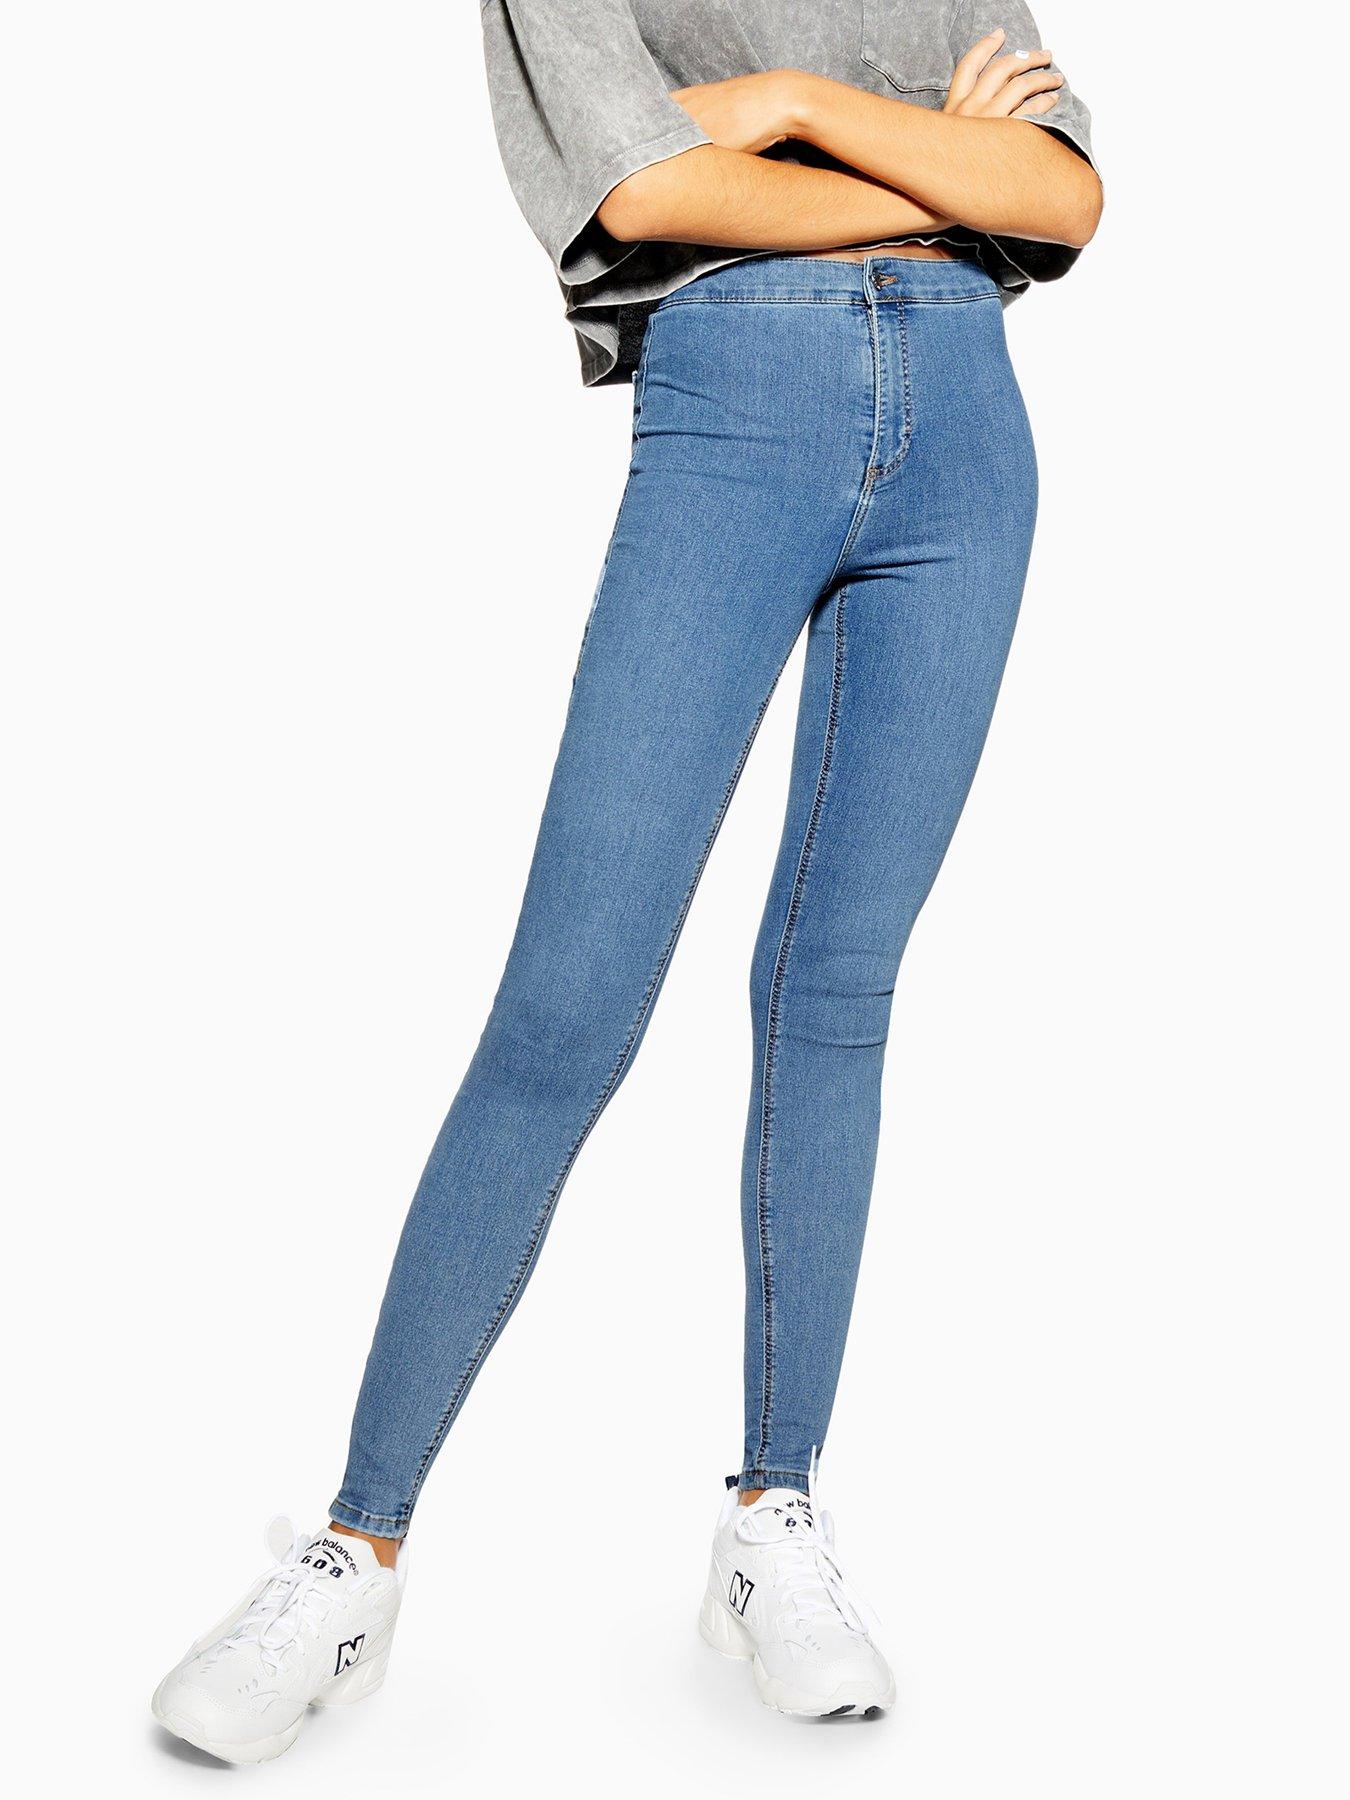 topshop jeans ireland